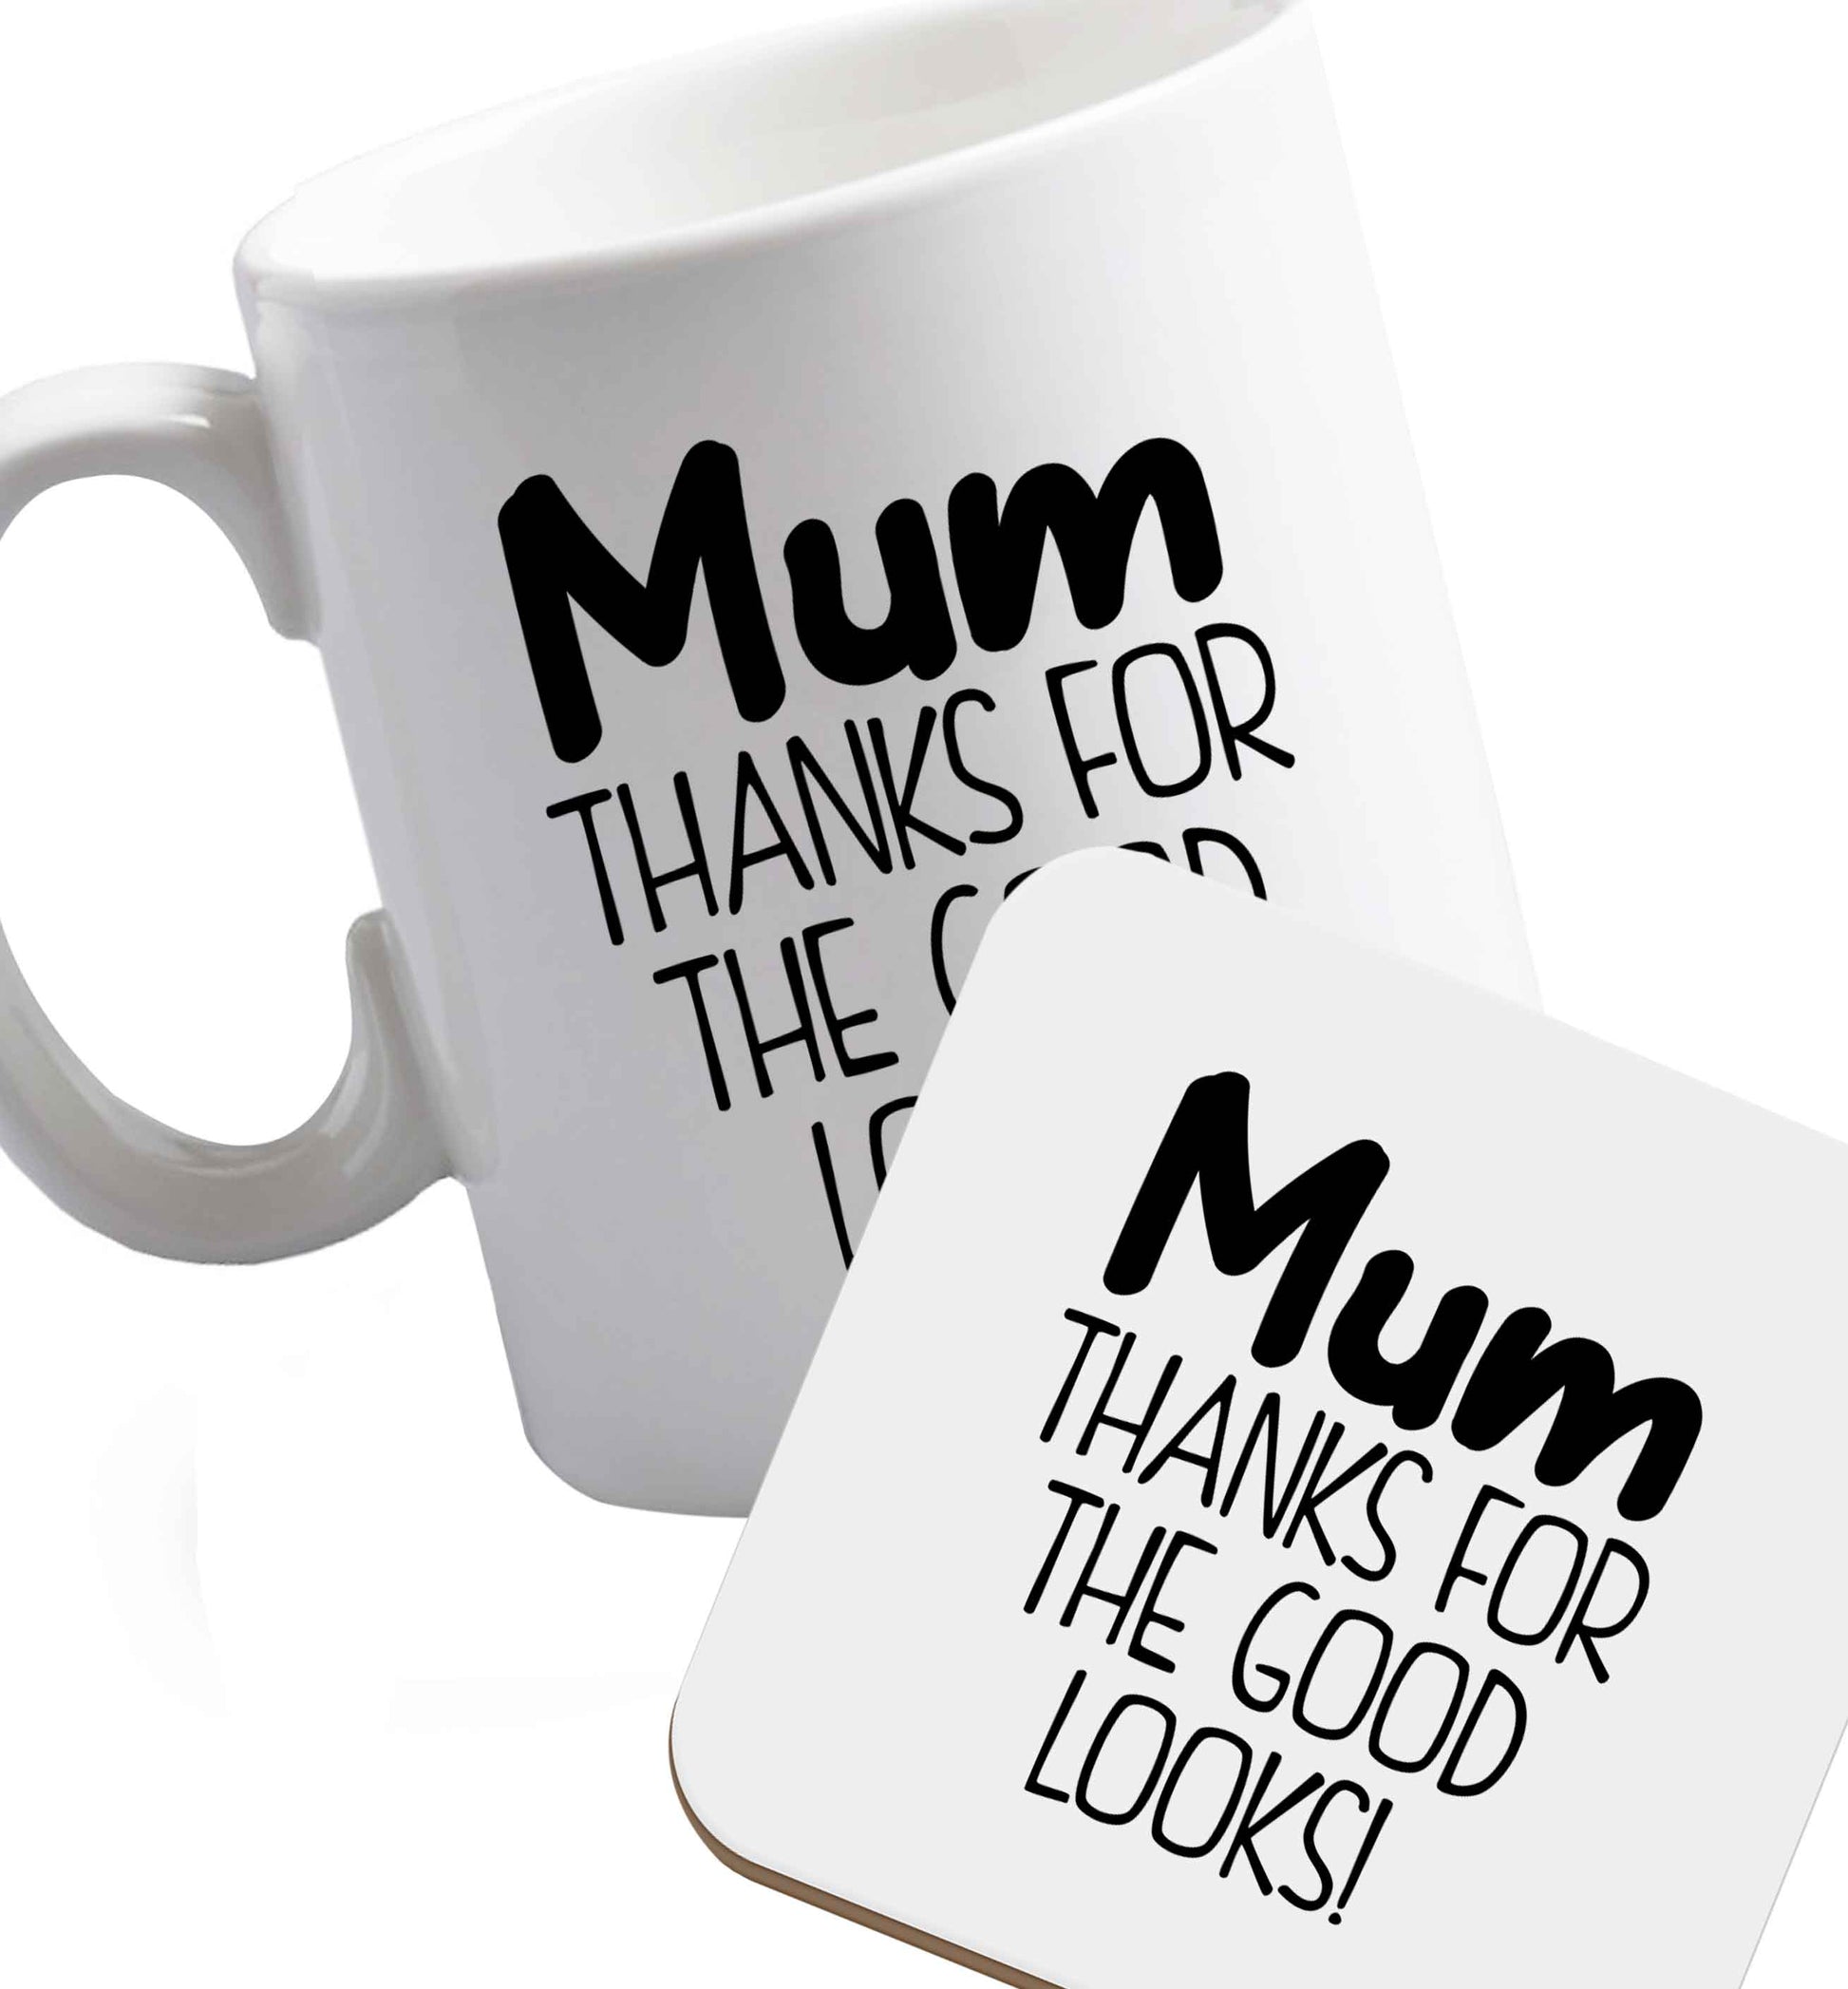 10 oz Mum thanks for the good looks! ceramic mug and coaster set right handed